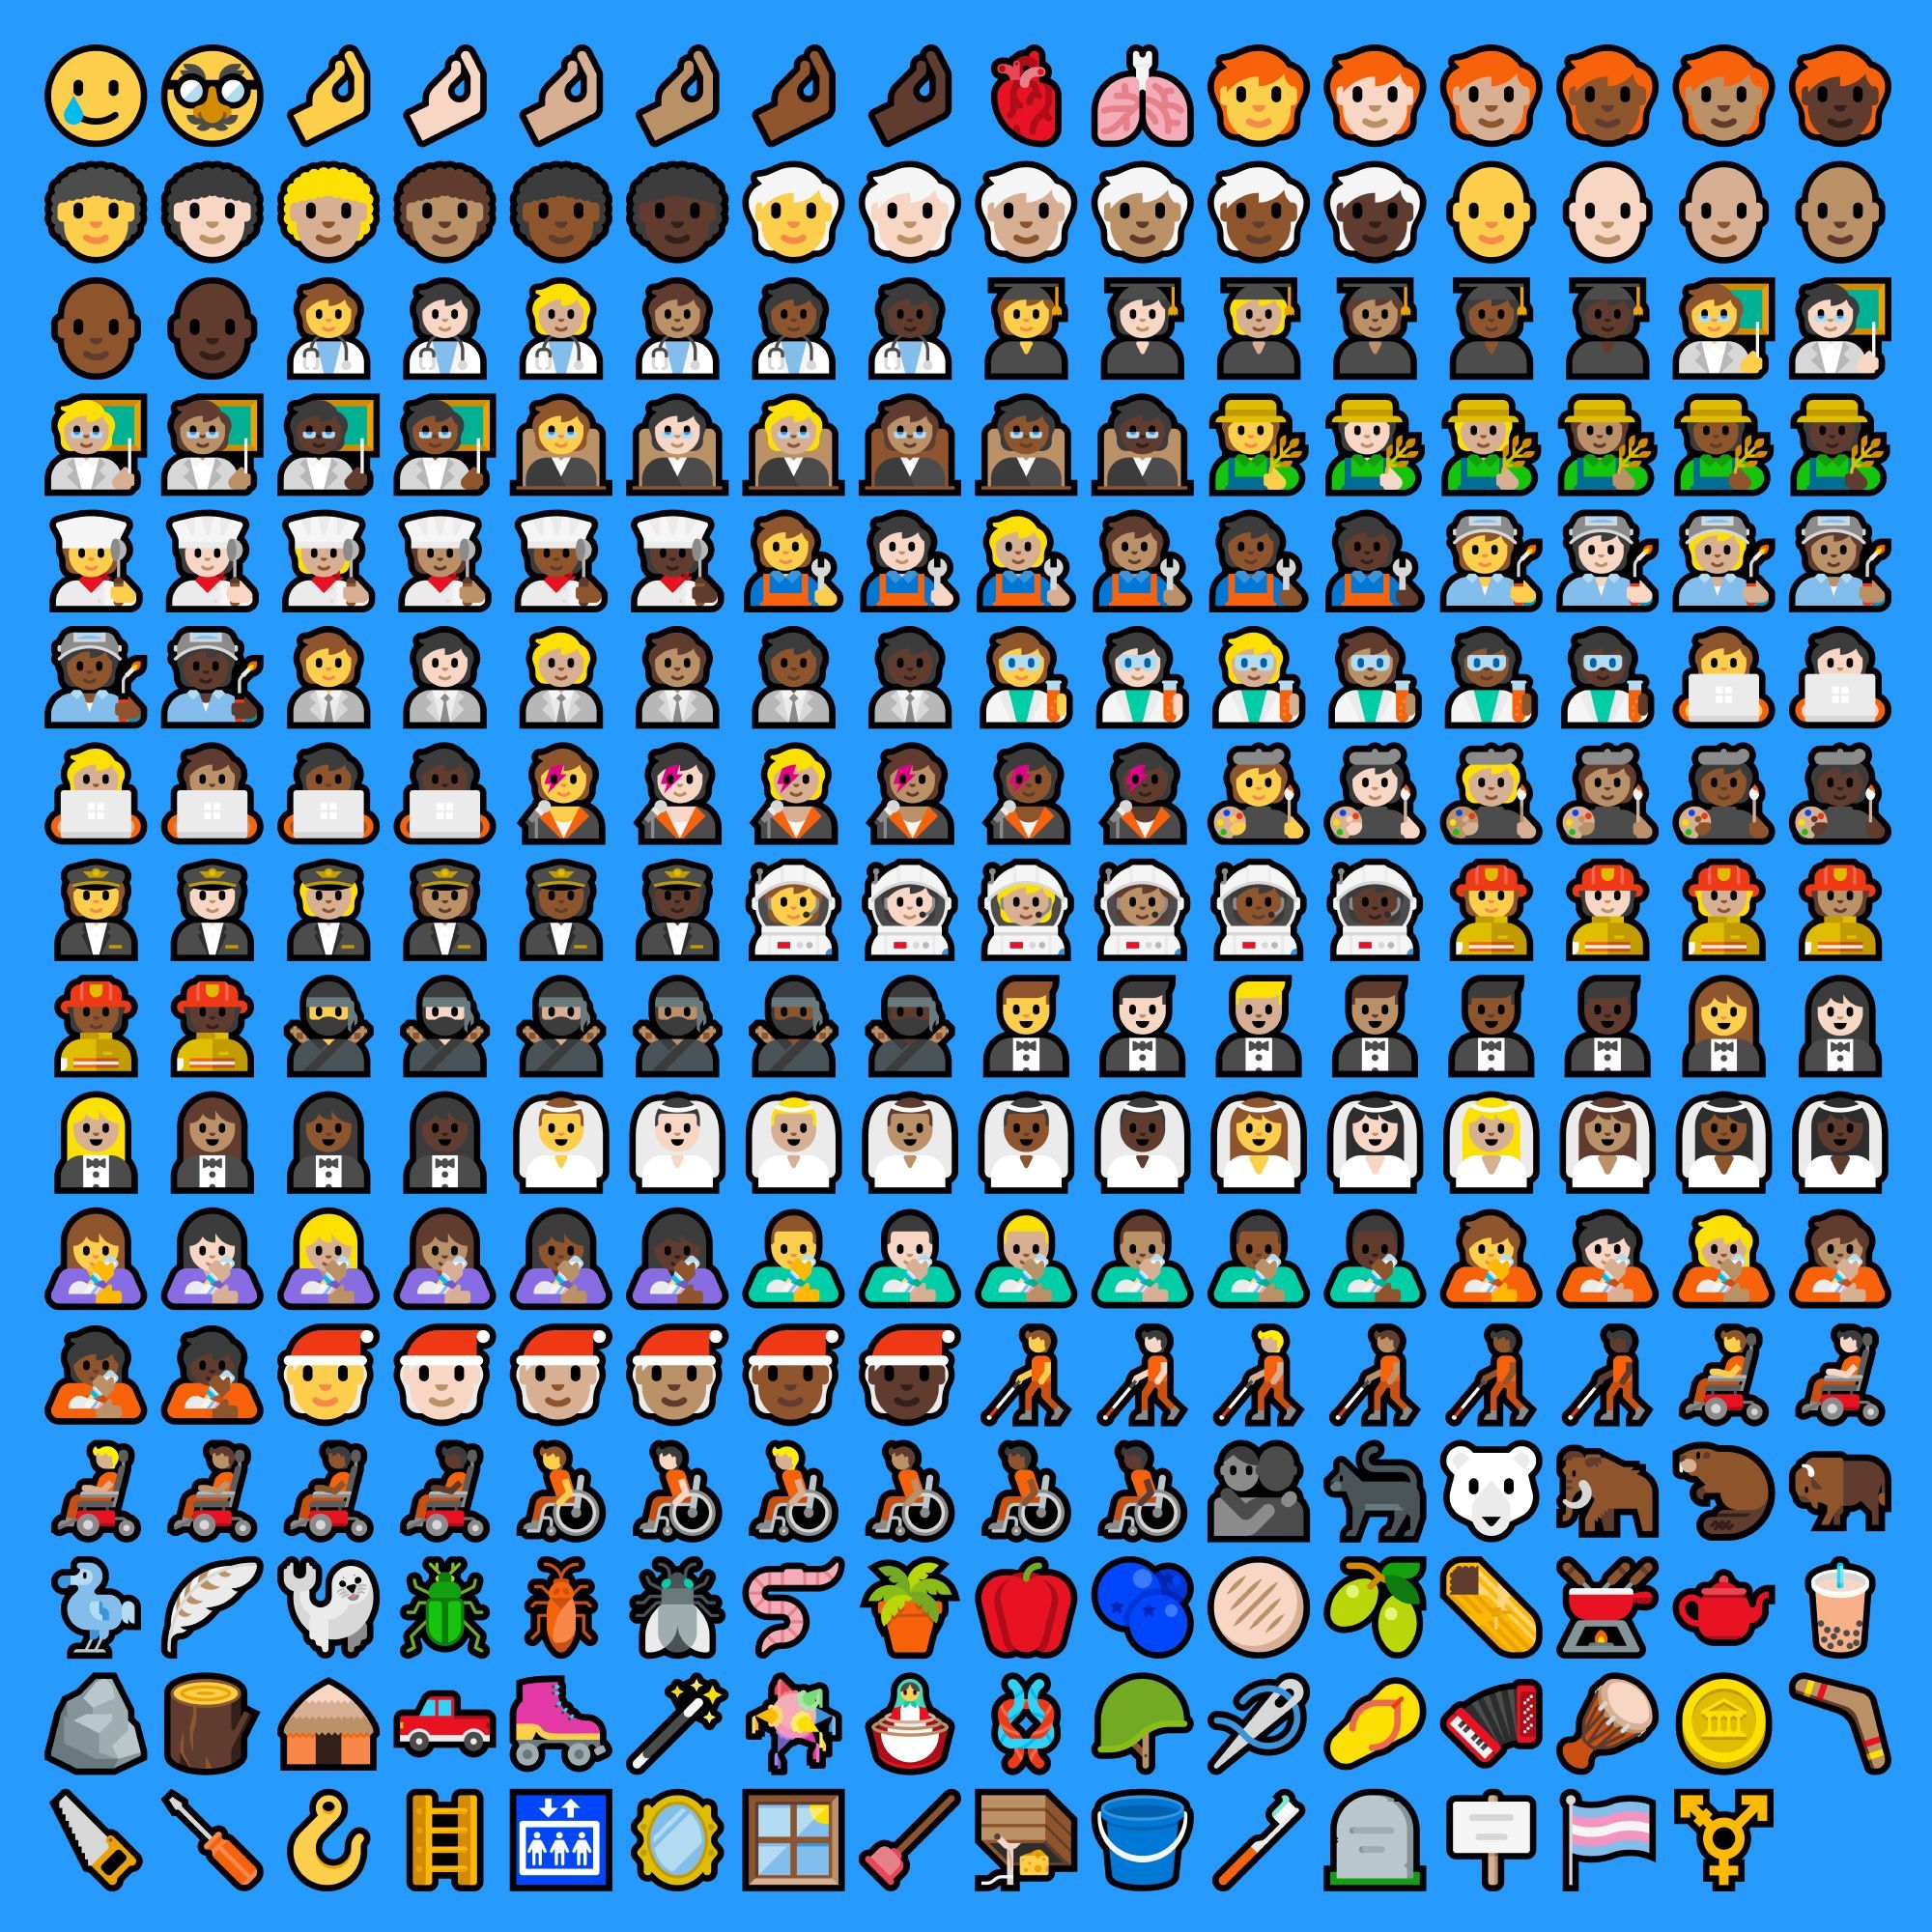 Emojipedia-Windows-11-October-Update-All-New-Emojis-2